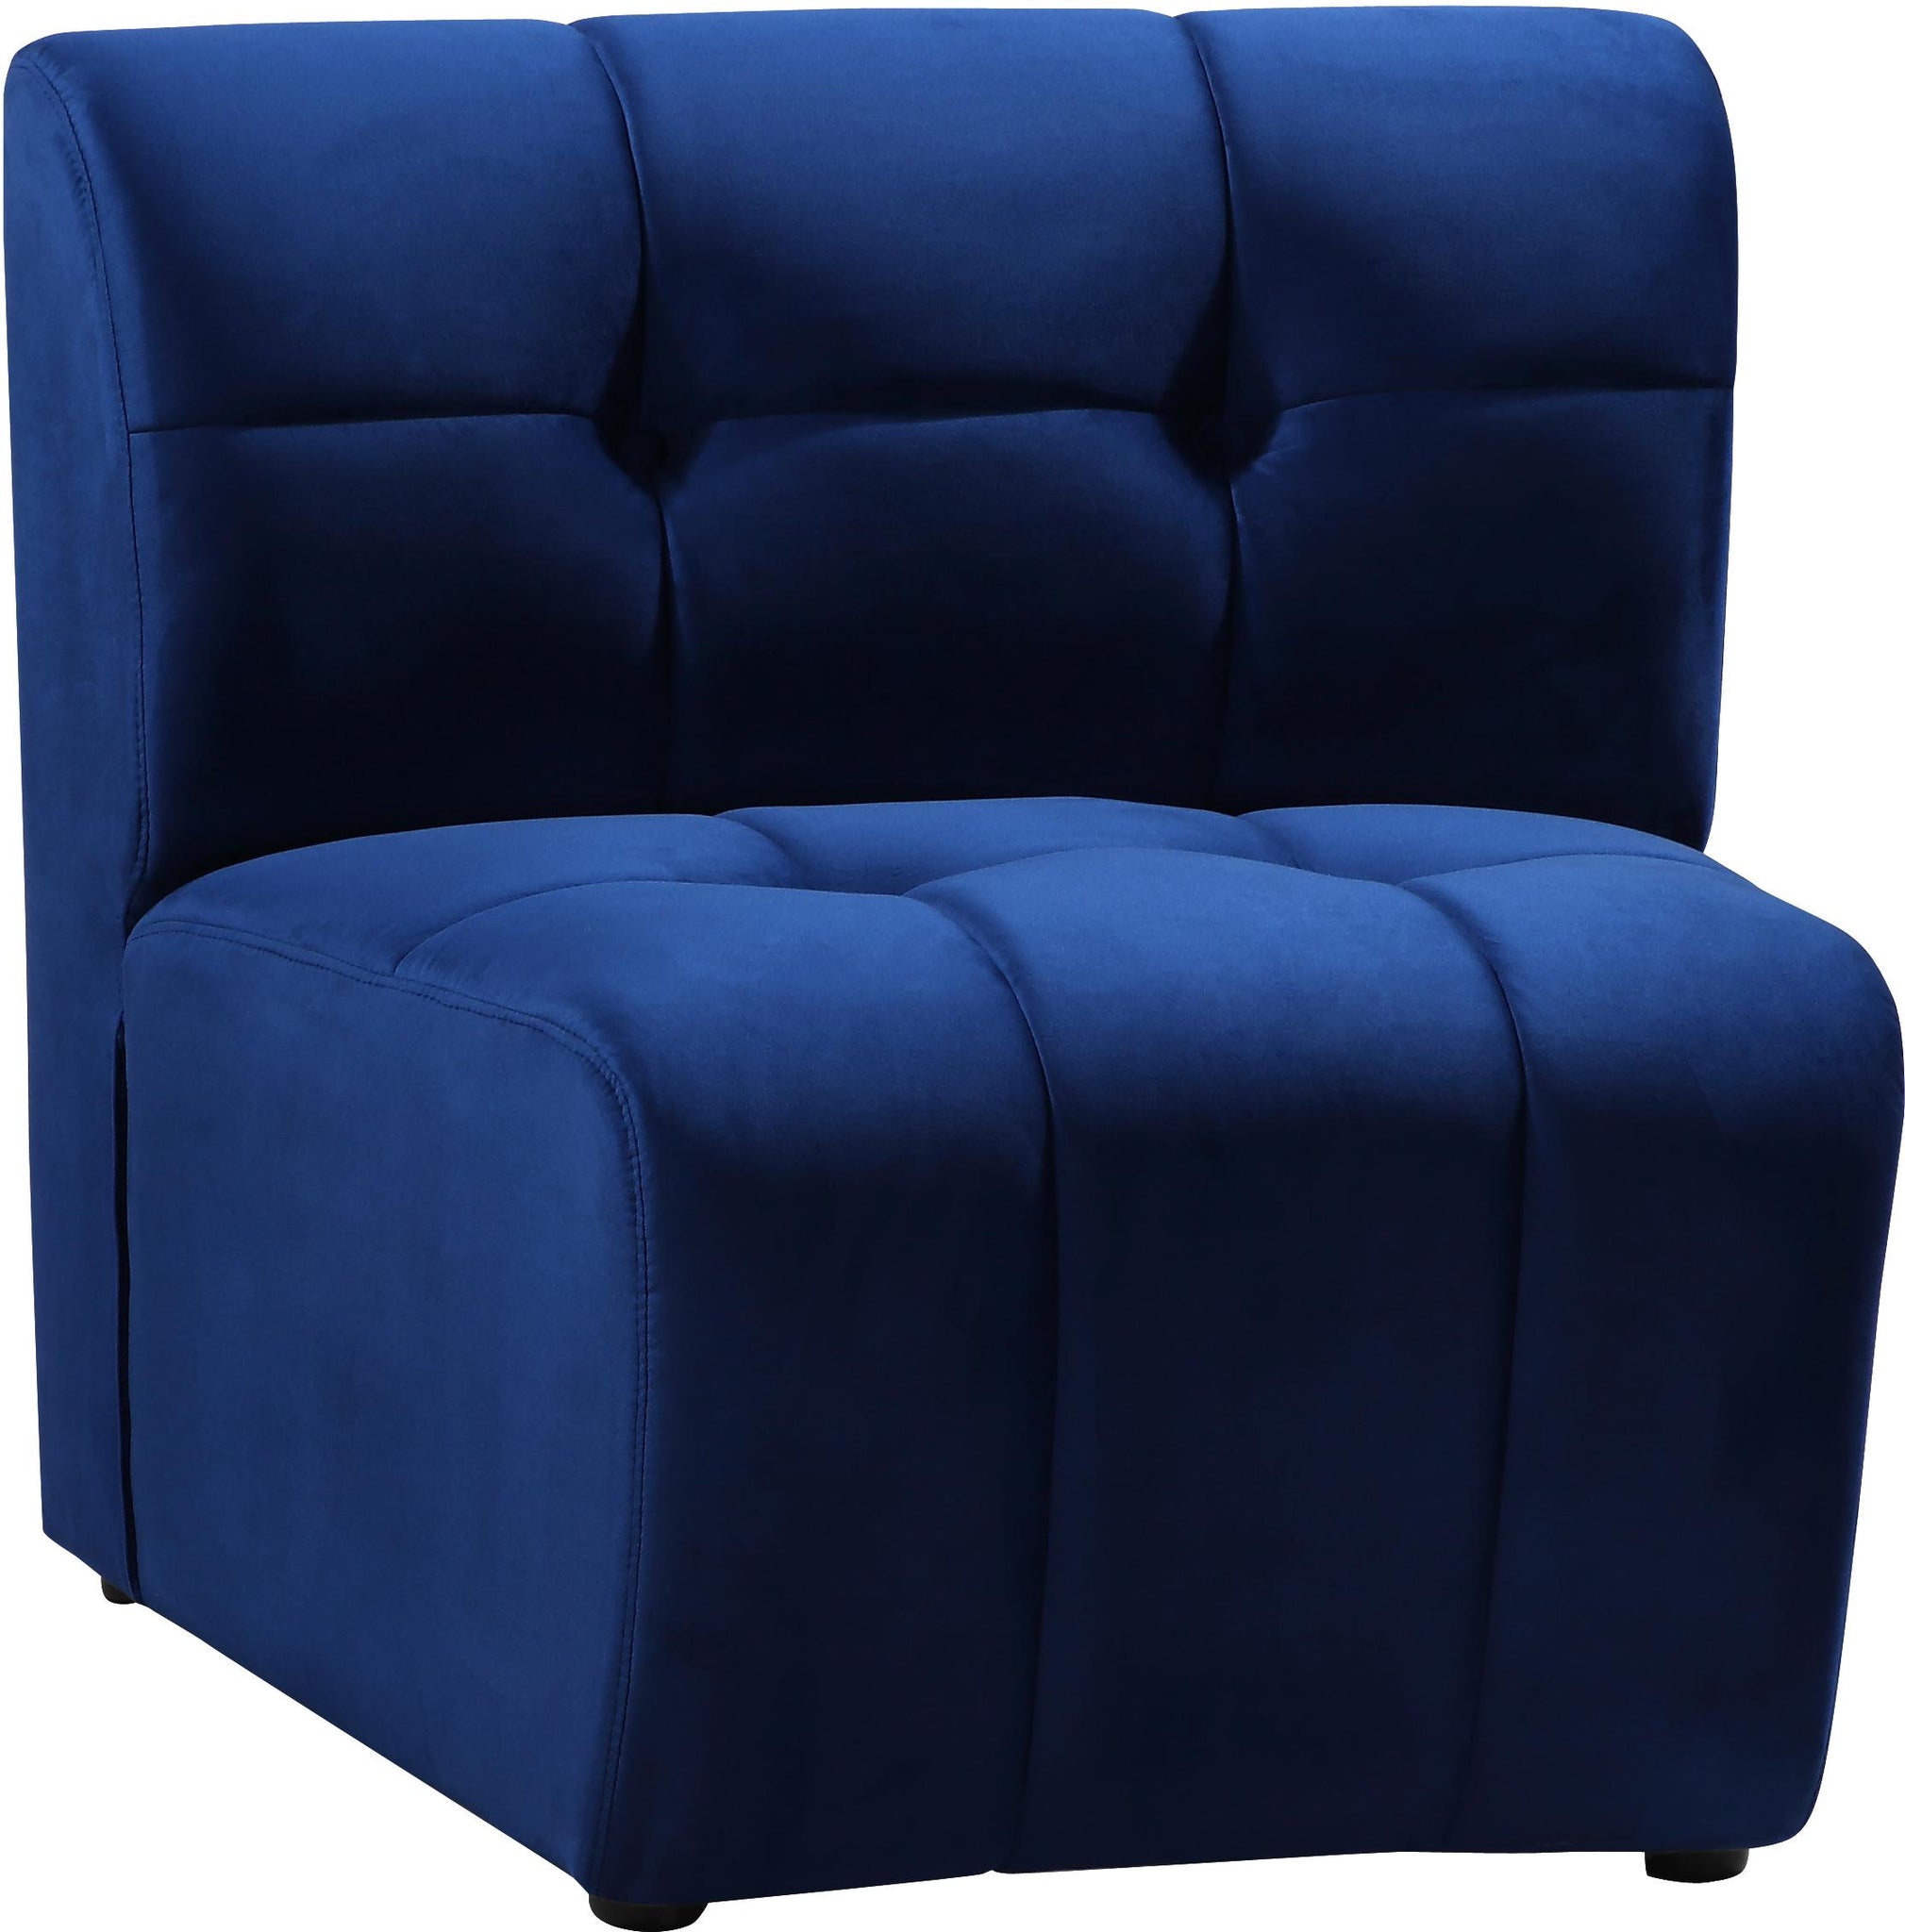 Limitless Navy Velvet Modular Chair - Furnish 4 Less 98 (NY)*